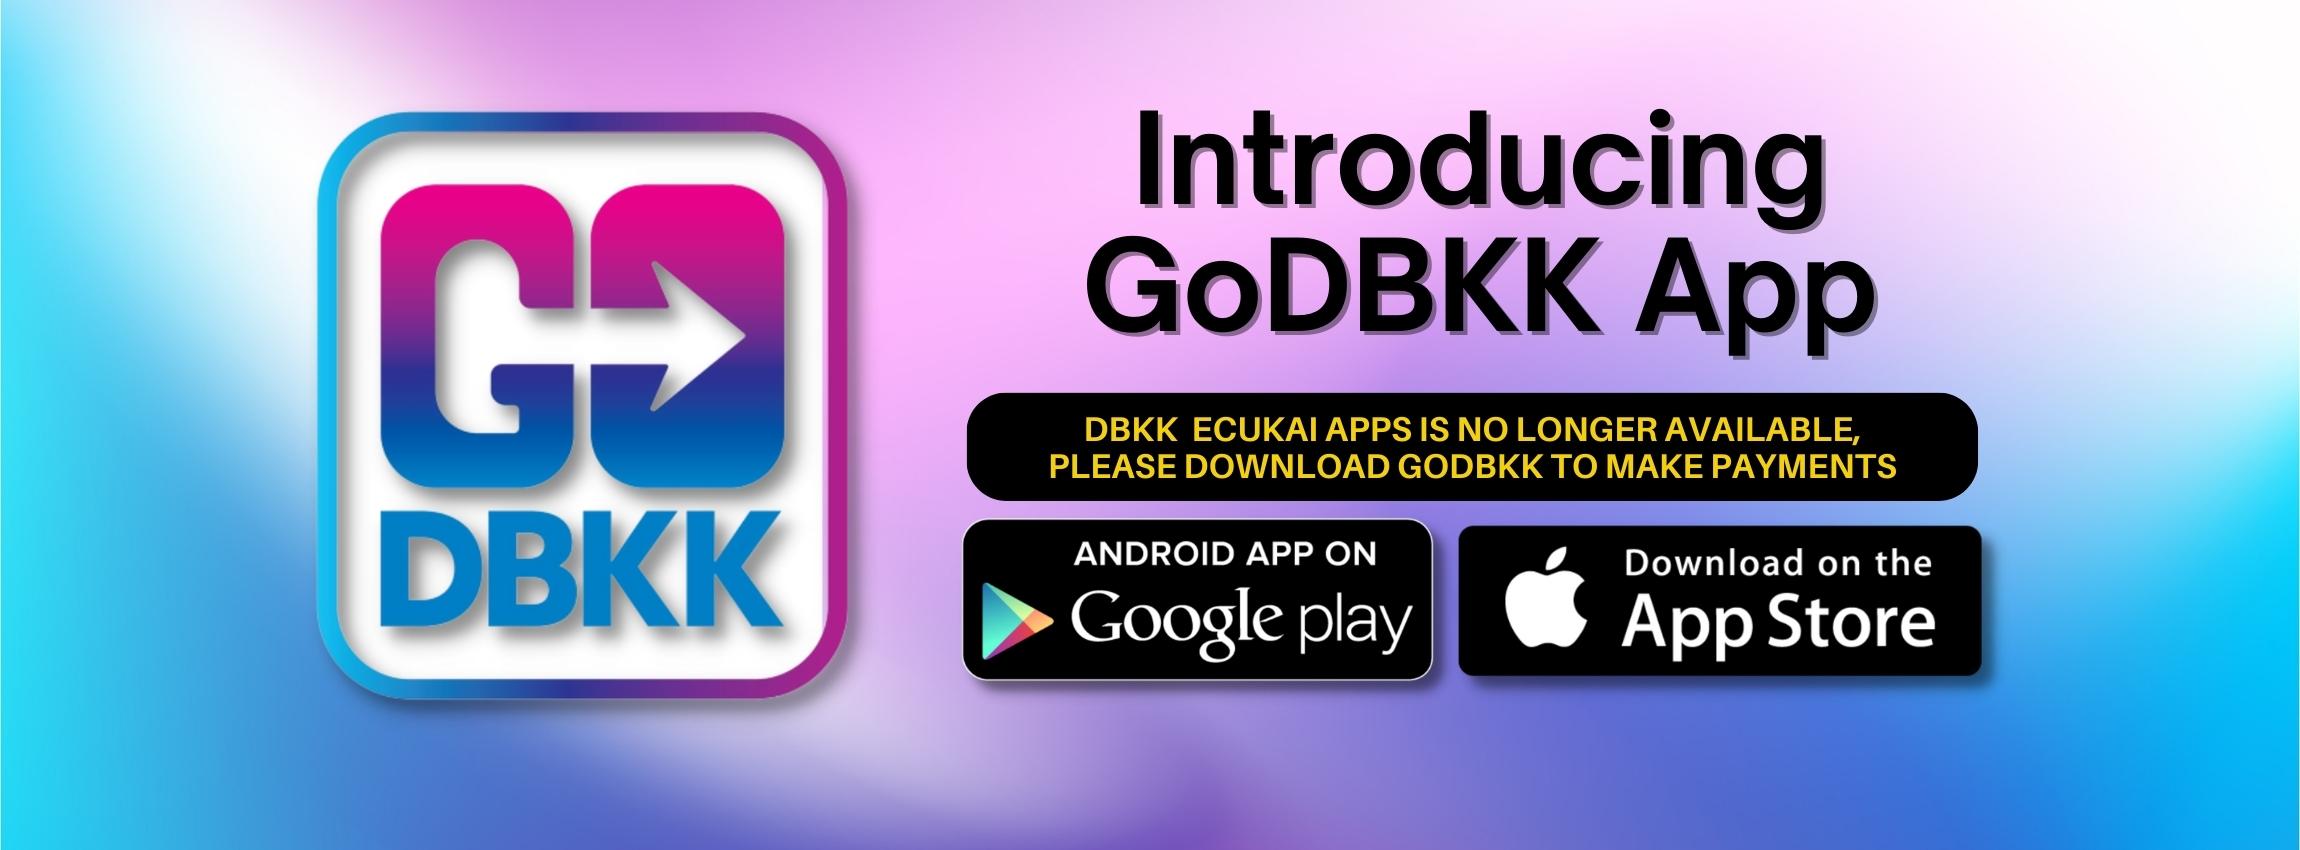 Please download GoDBKK App to make payments